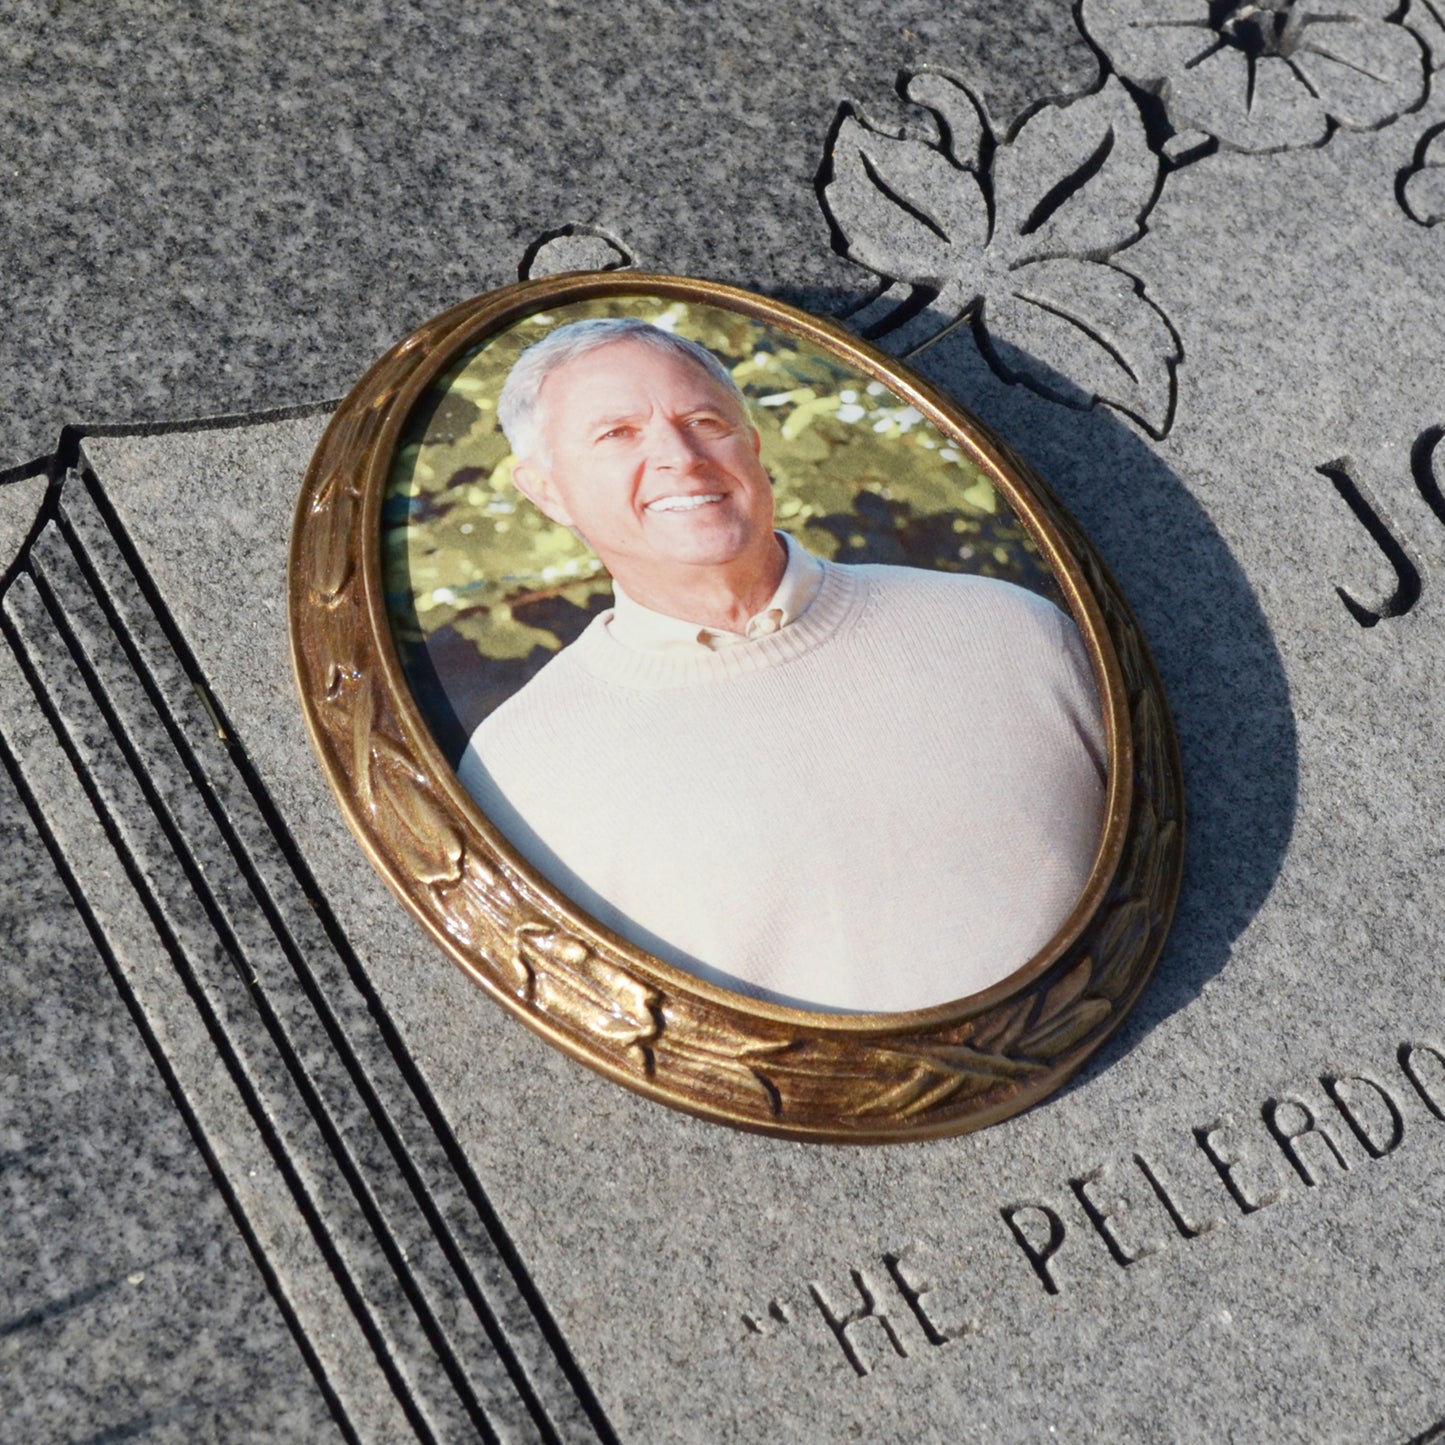 Waterproof Frame for Cemetery. Man in ceramic oval bronze frame for headstone.